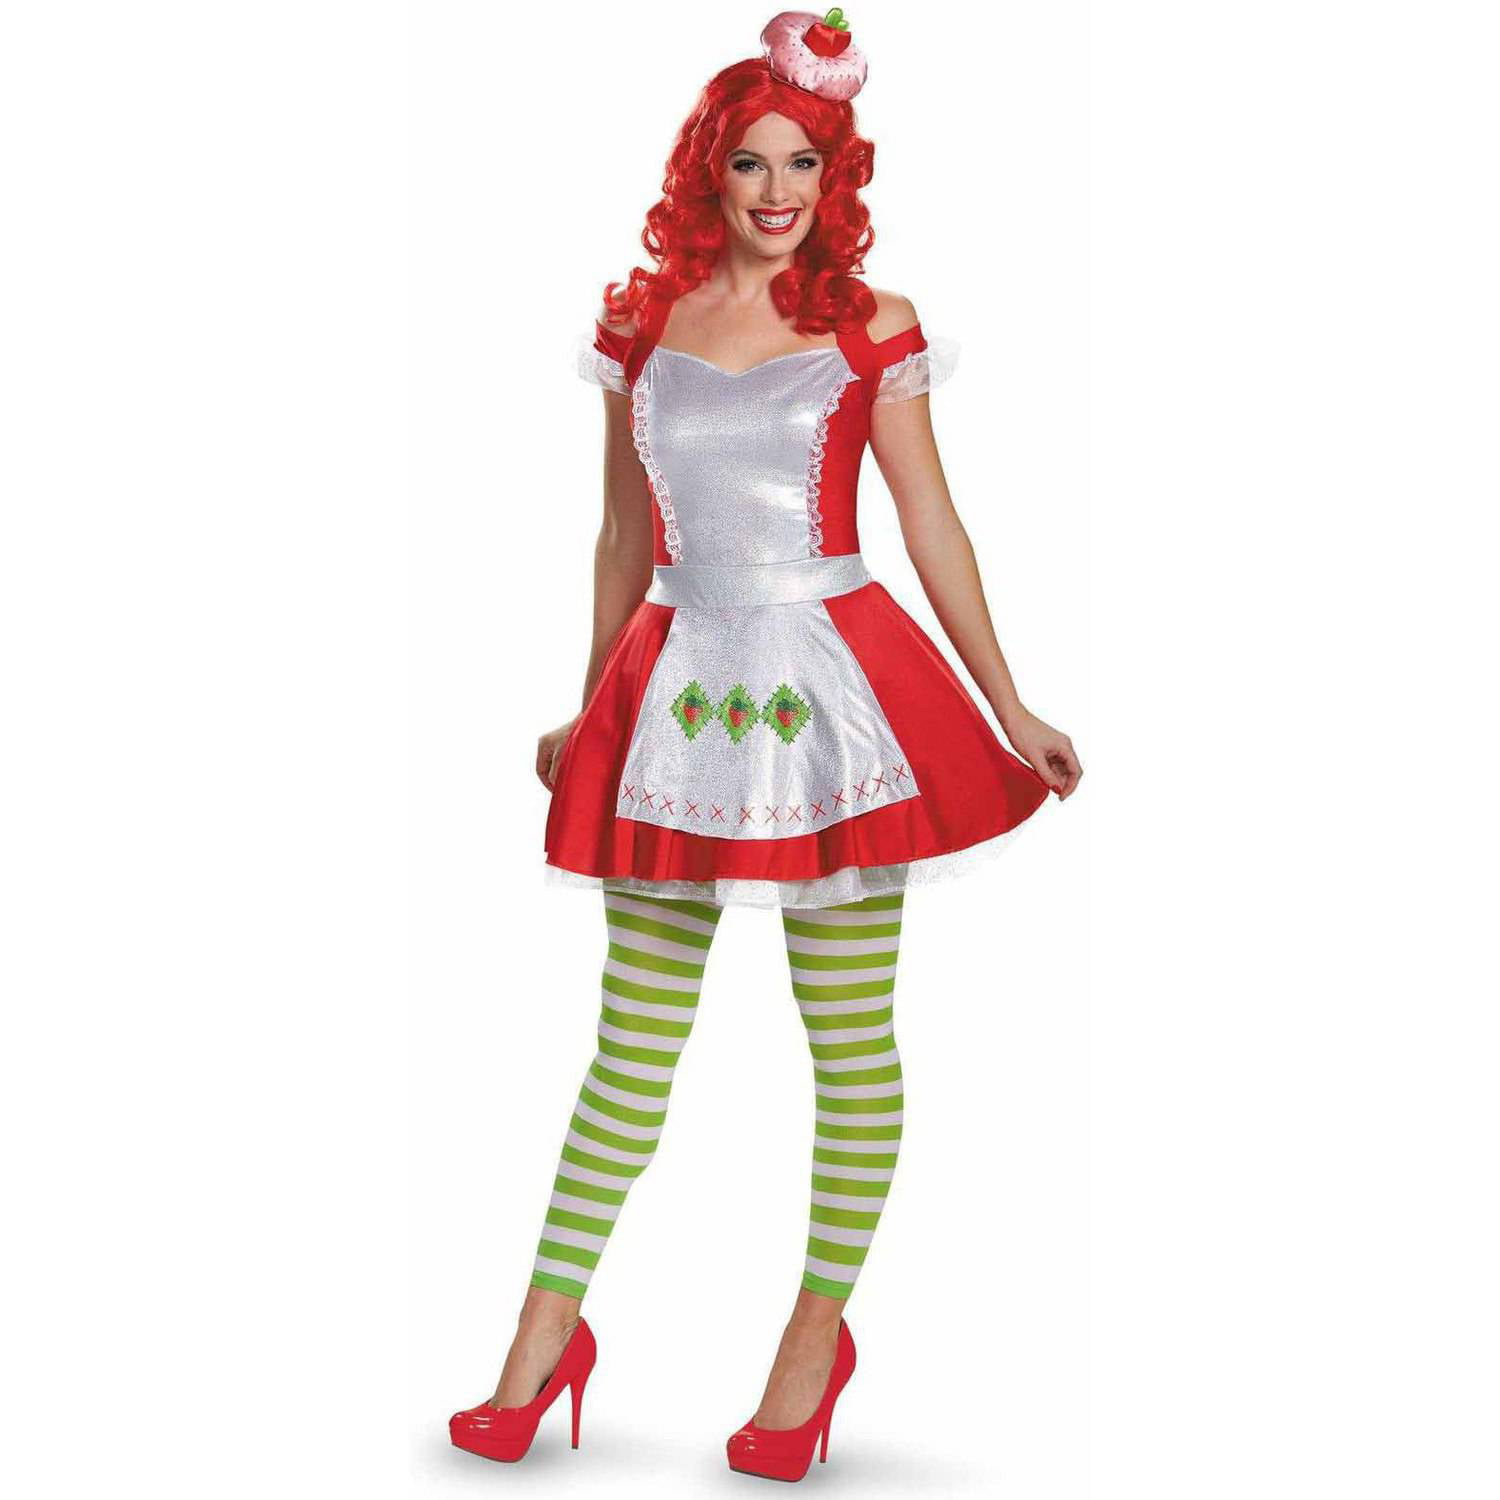 Strawberry Shortcake Women's Adult Halloween Costume - Walmart.com.